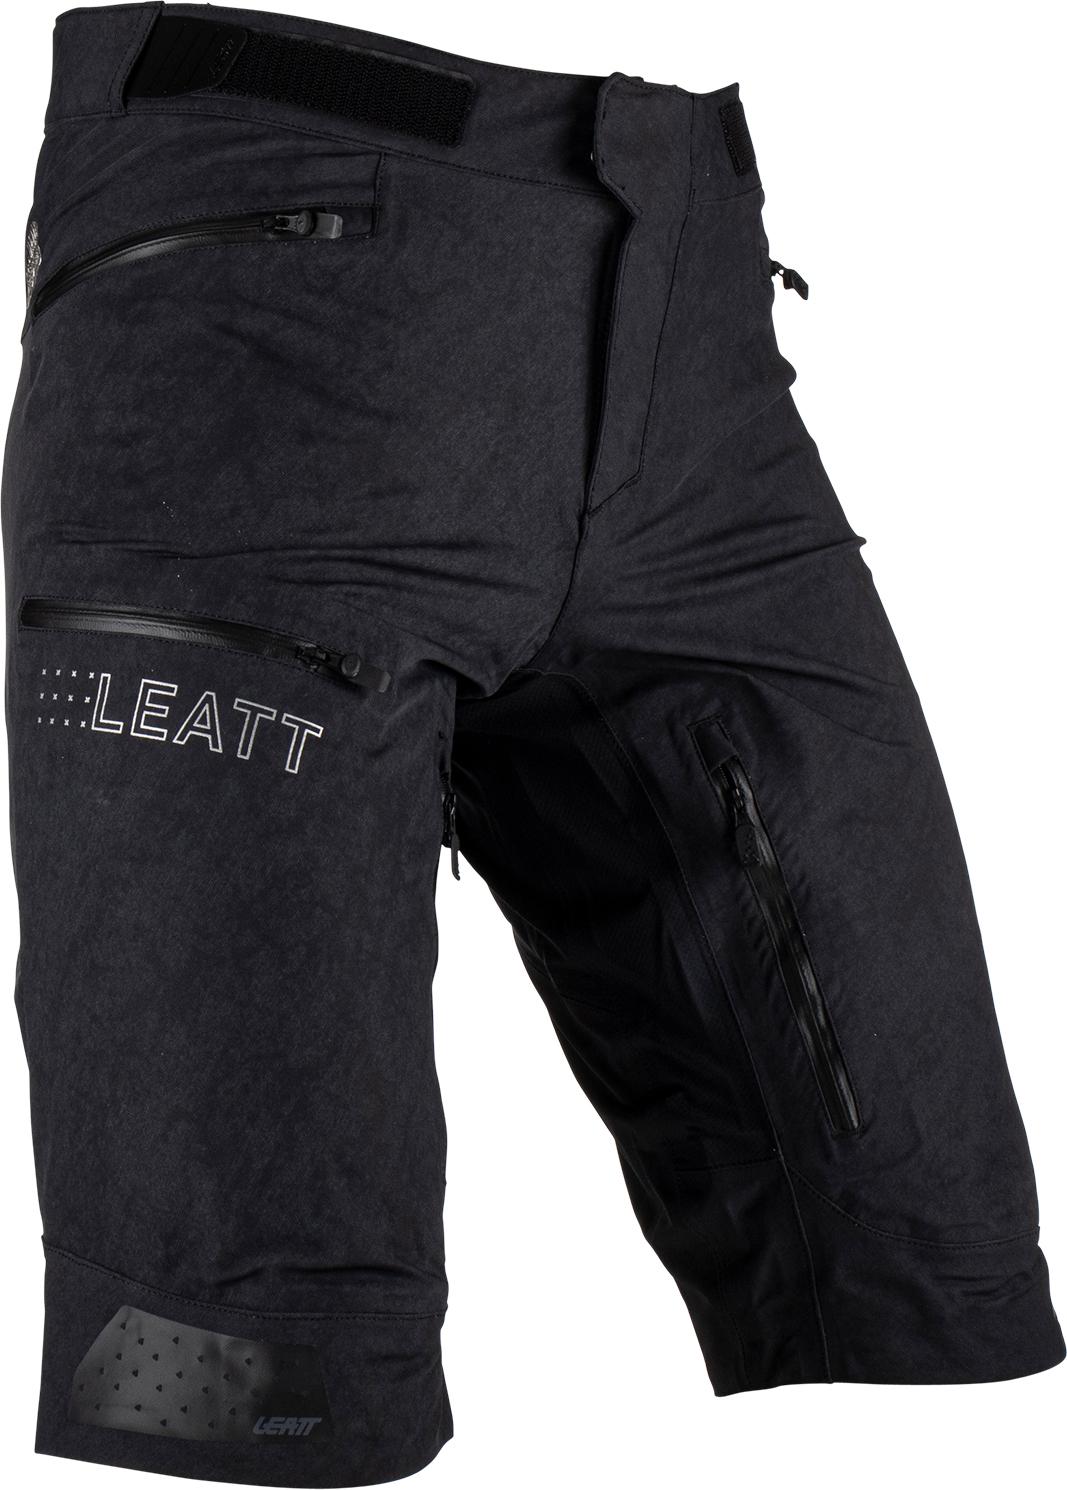 Leatt Mtb Hydradri 5.0 Shorts - Black